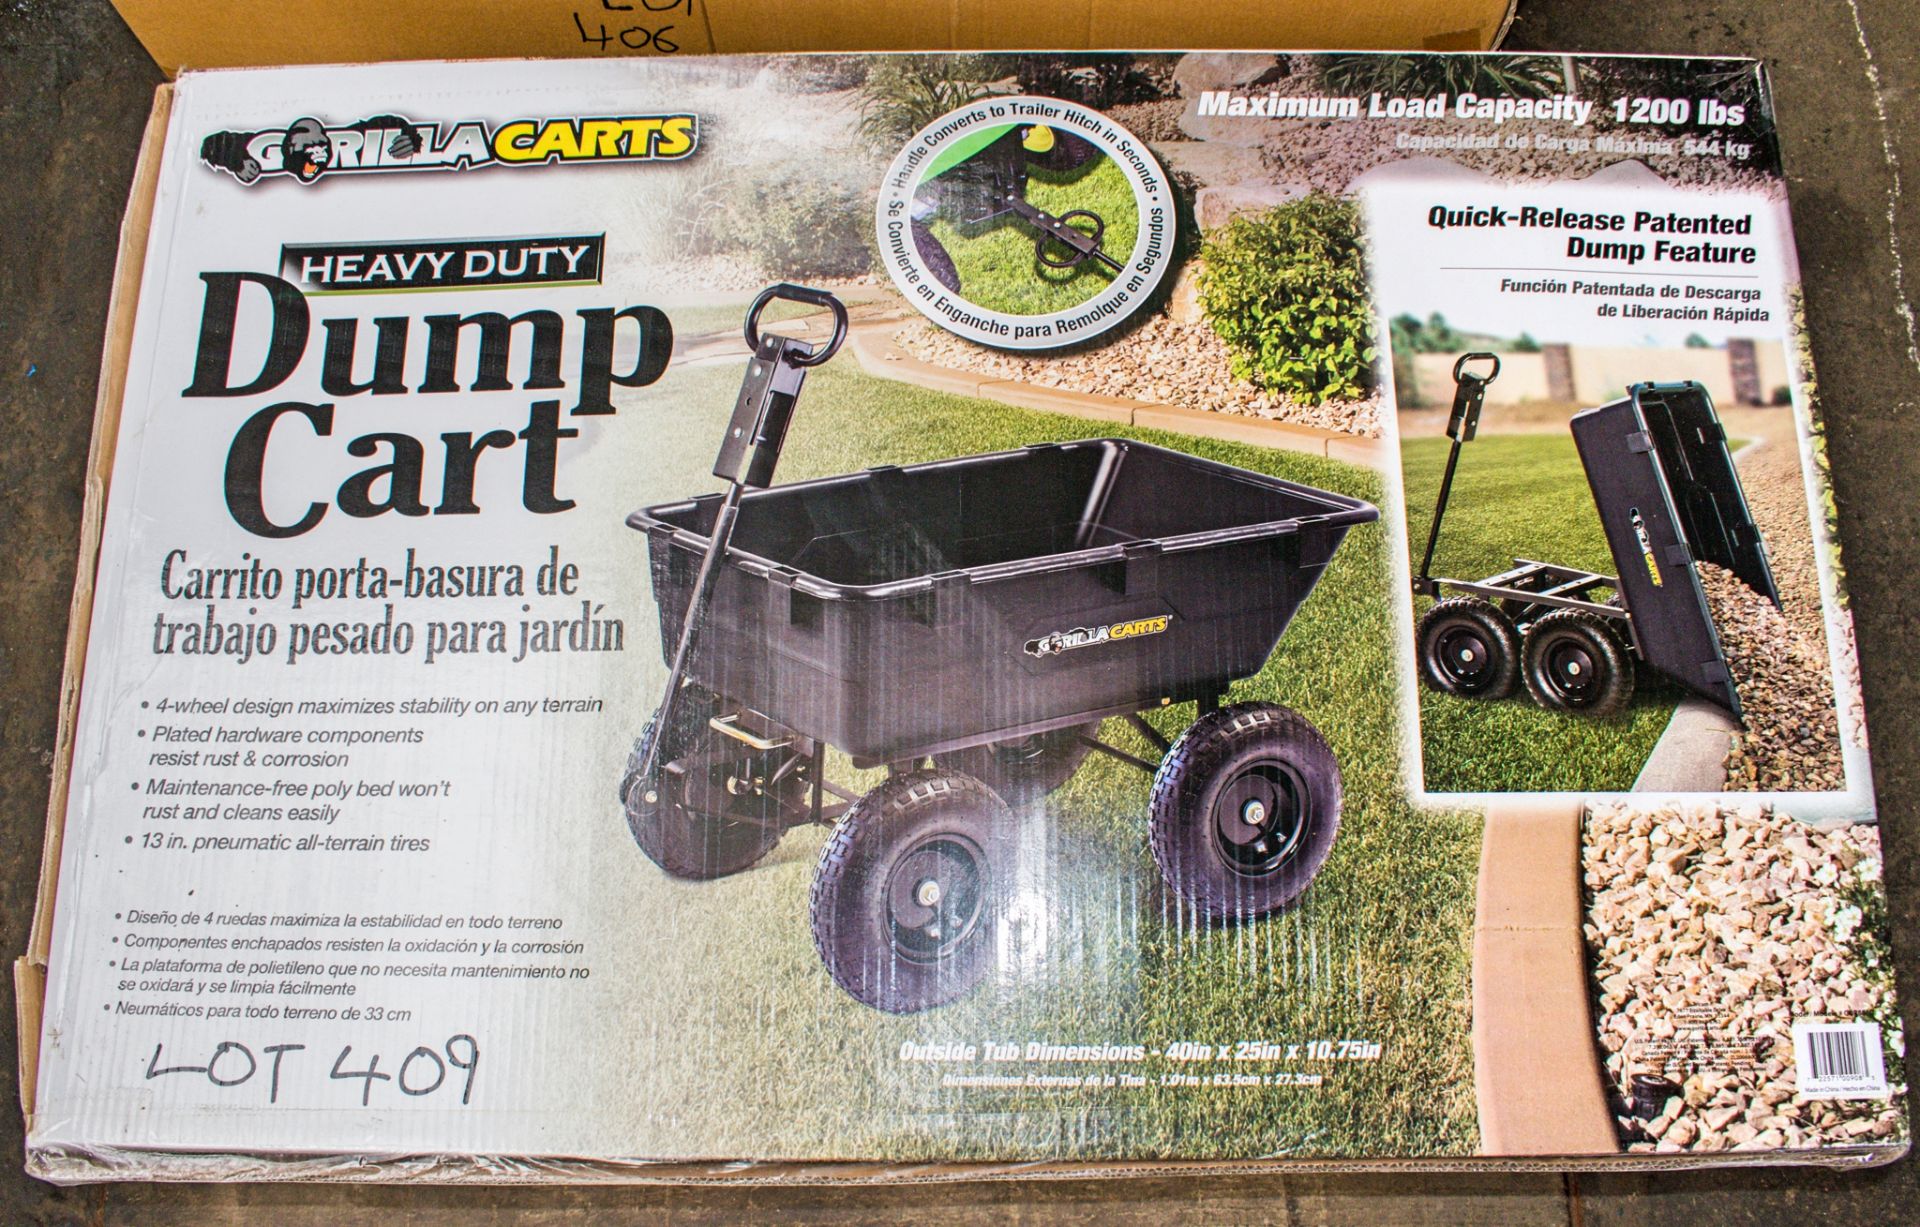 Heavy duty dump cart *new & unused*